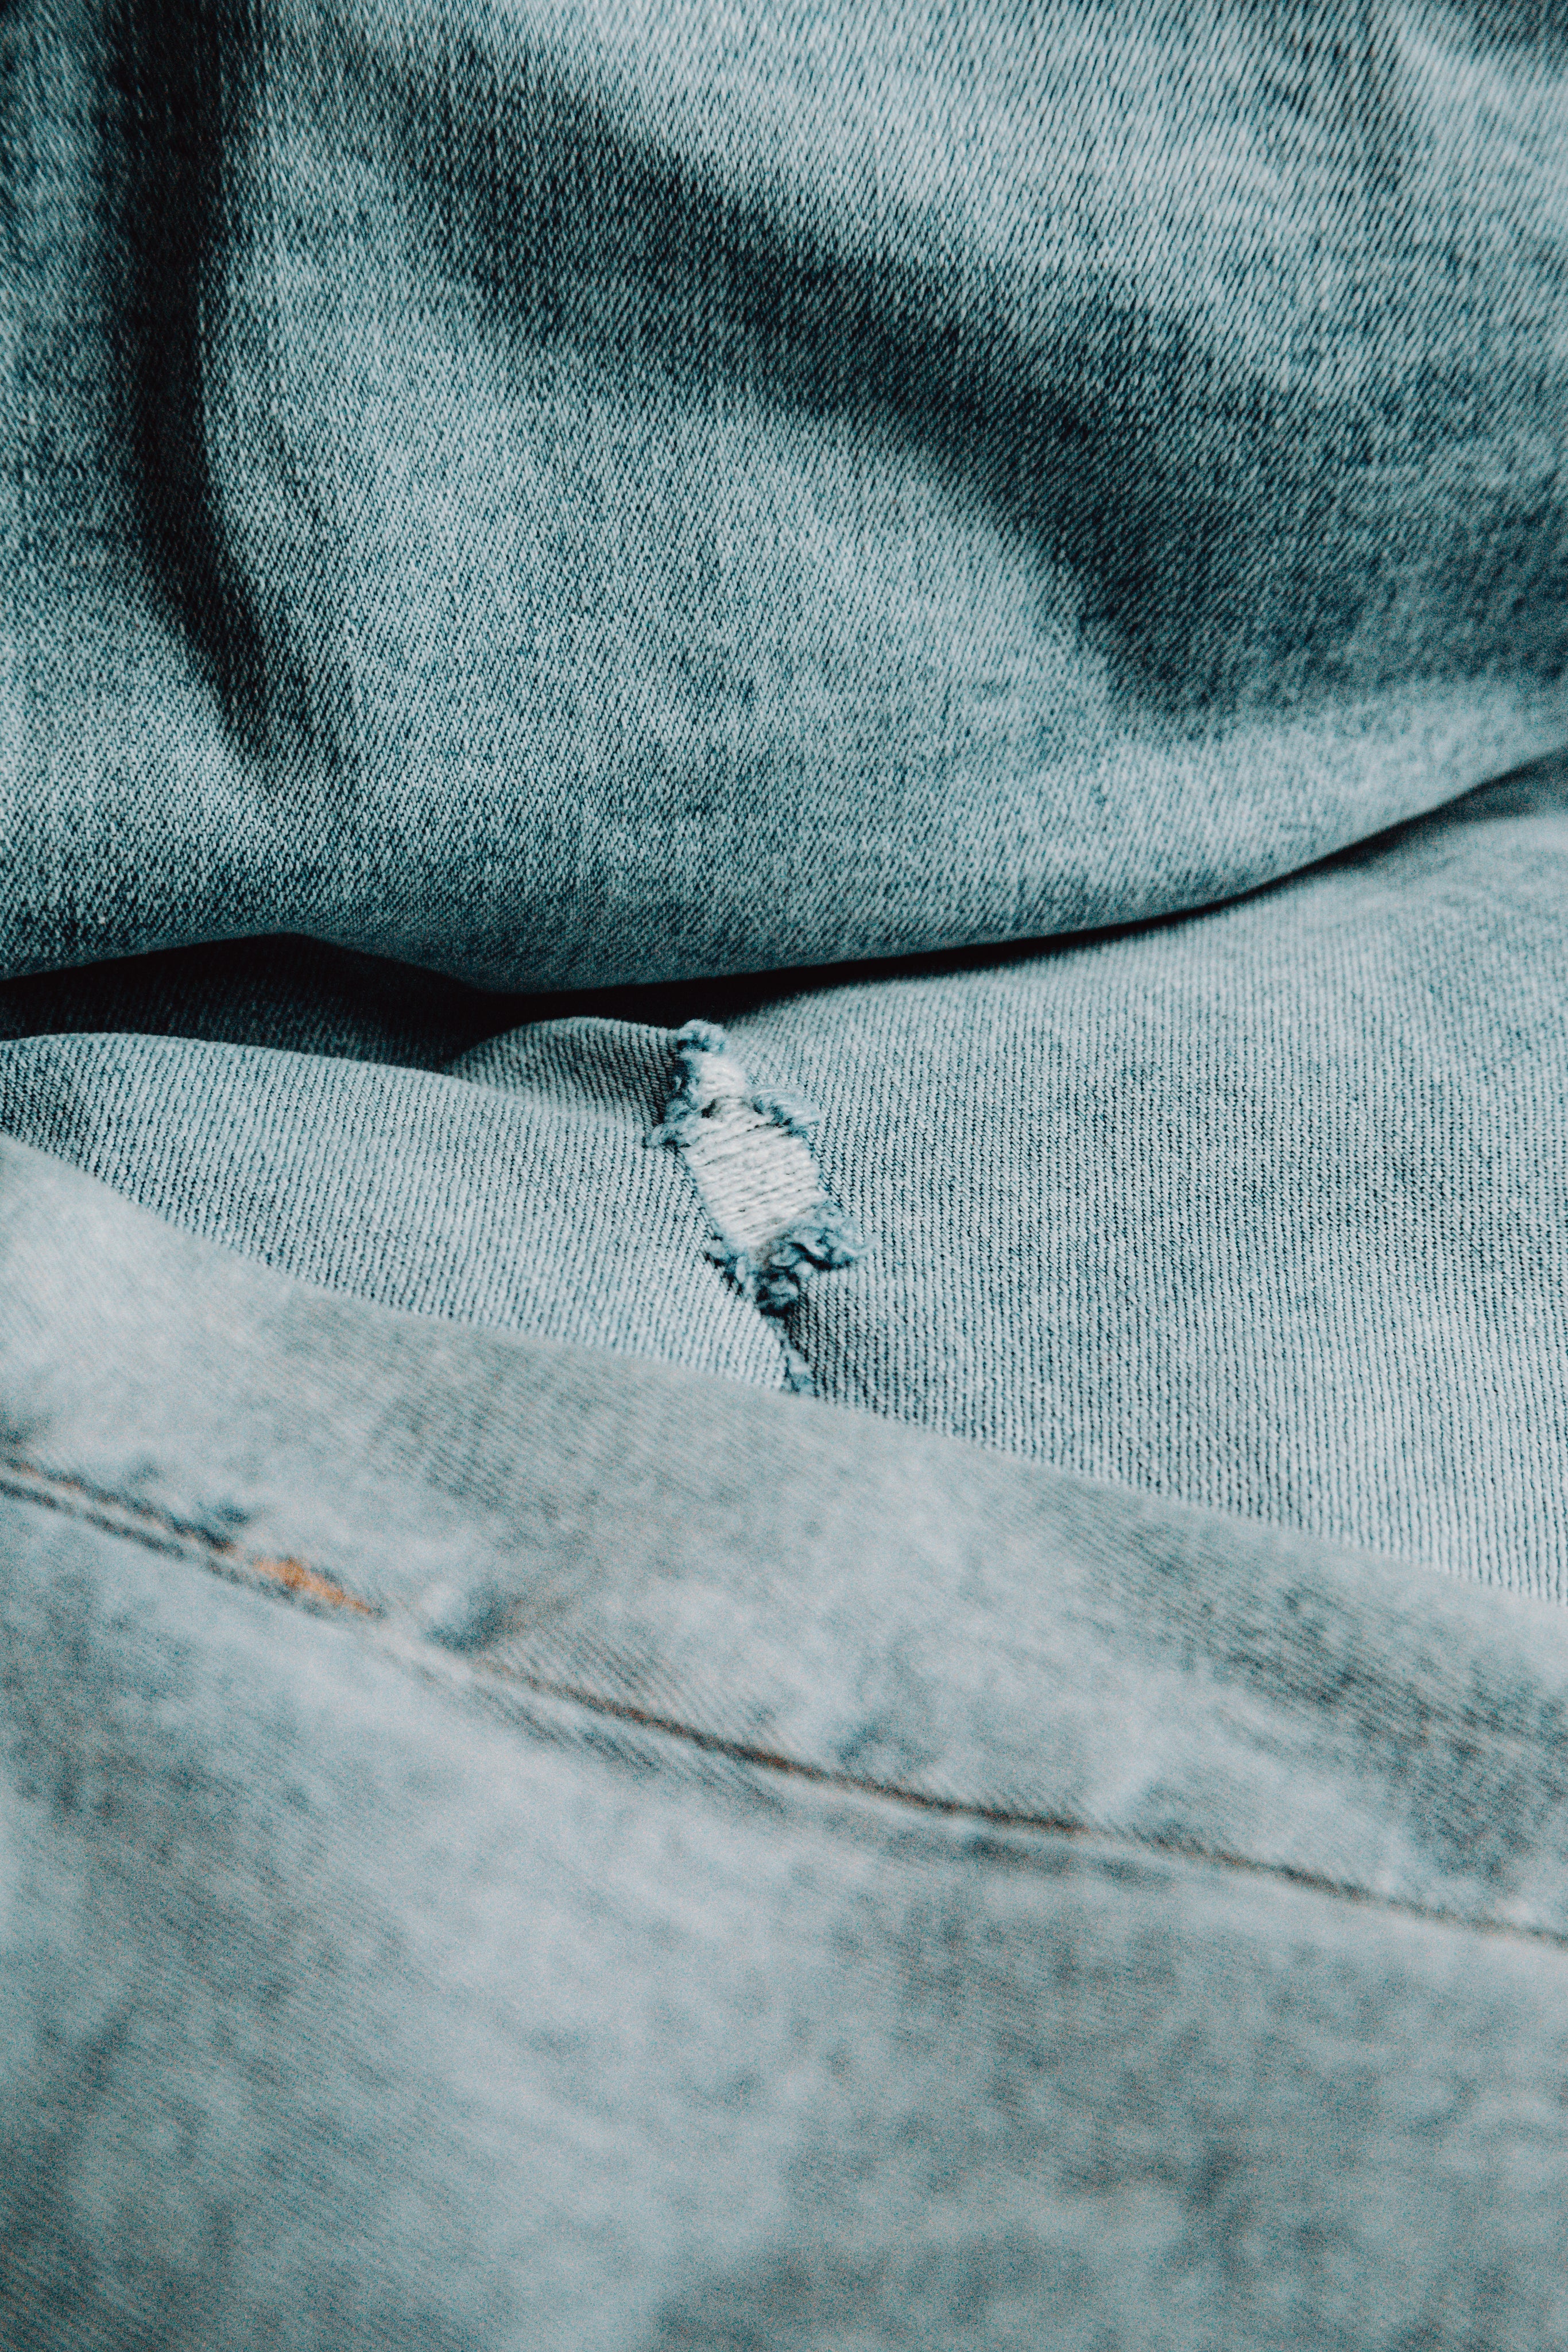 close-up-of-jean-fabric.jpg